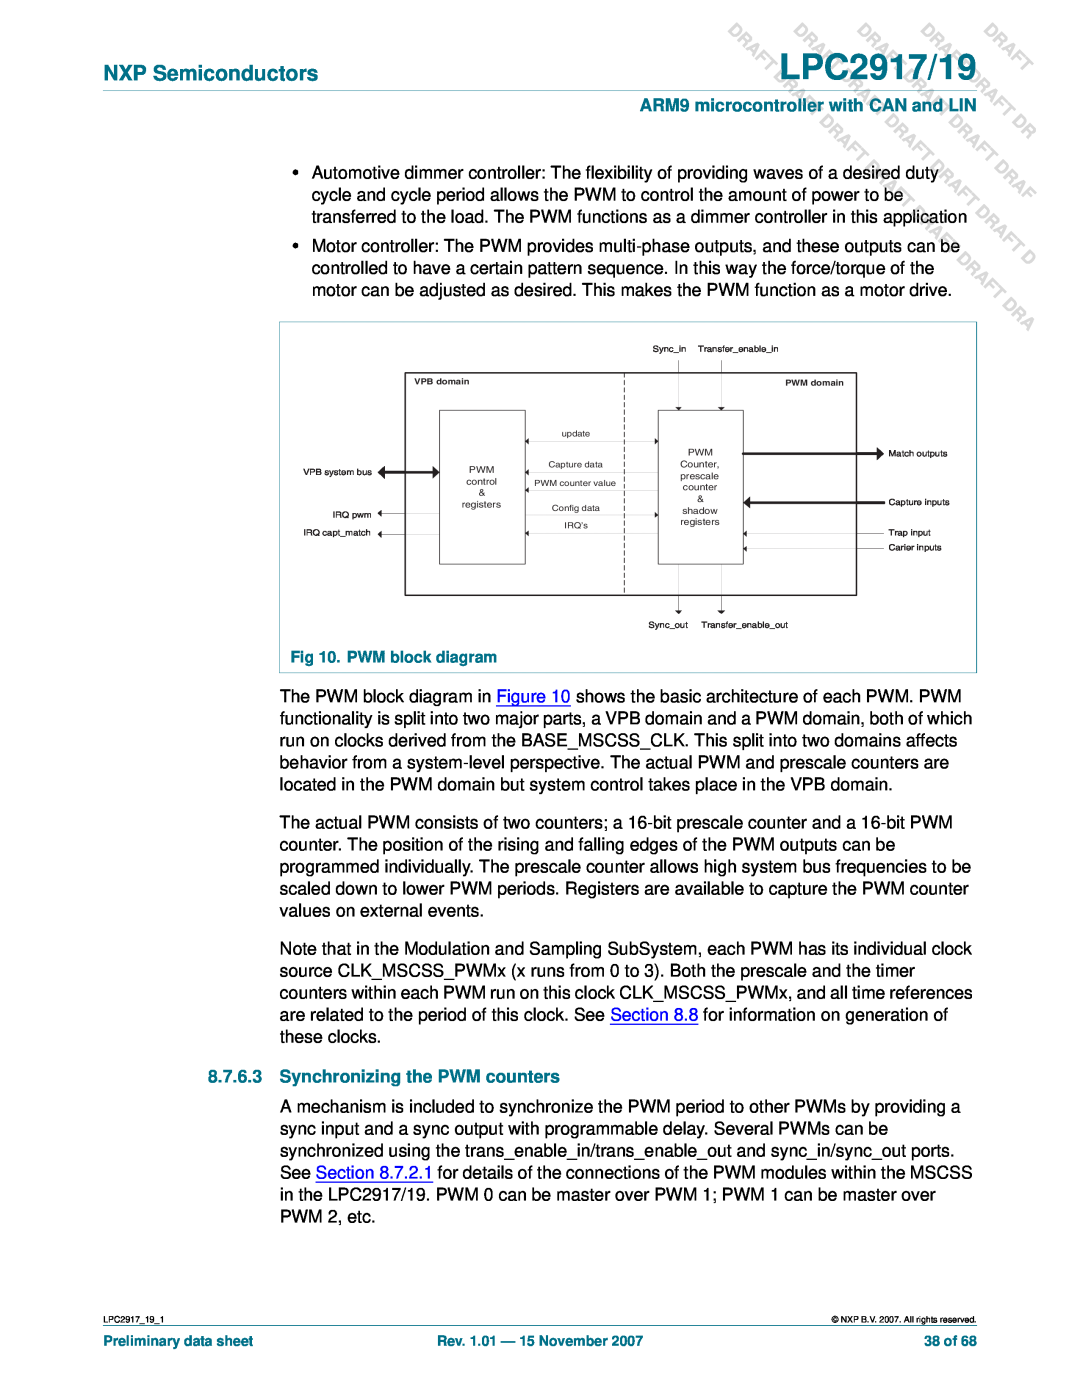 NXP Semiconductors LPC2919 user manual Synchronizing the PWM counters, DLPC2917/19, PWM block diagram 